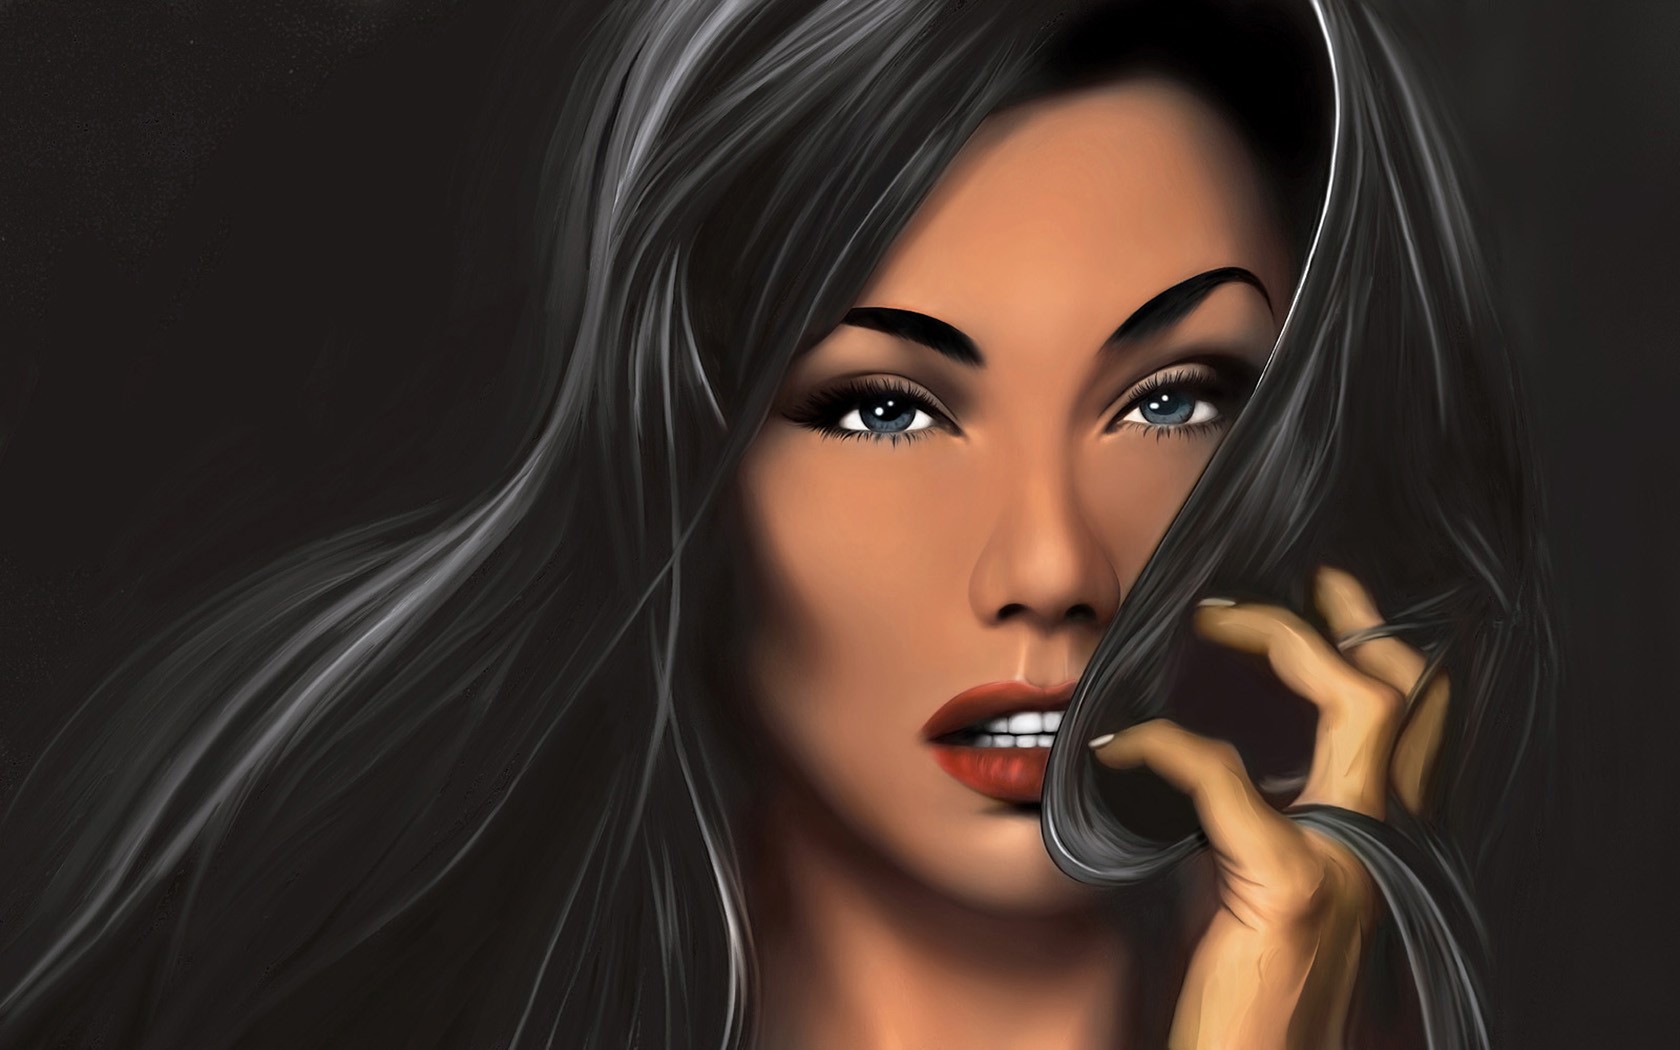 General 1680x1050 artwork soft shading women dark hair red lipstick long hair face looking at viewer black hair portrait